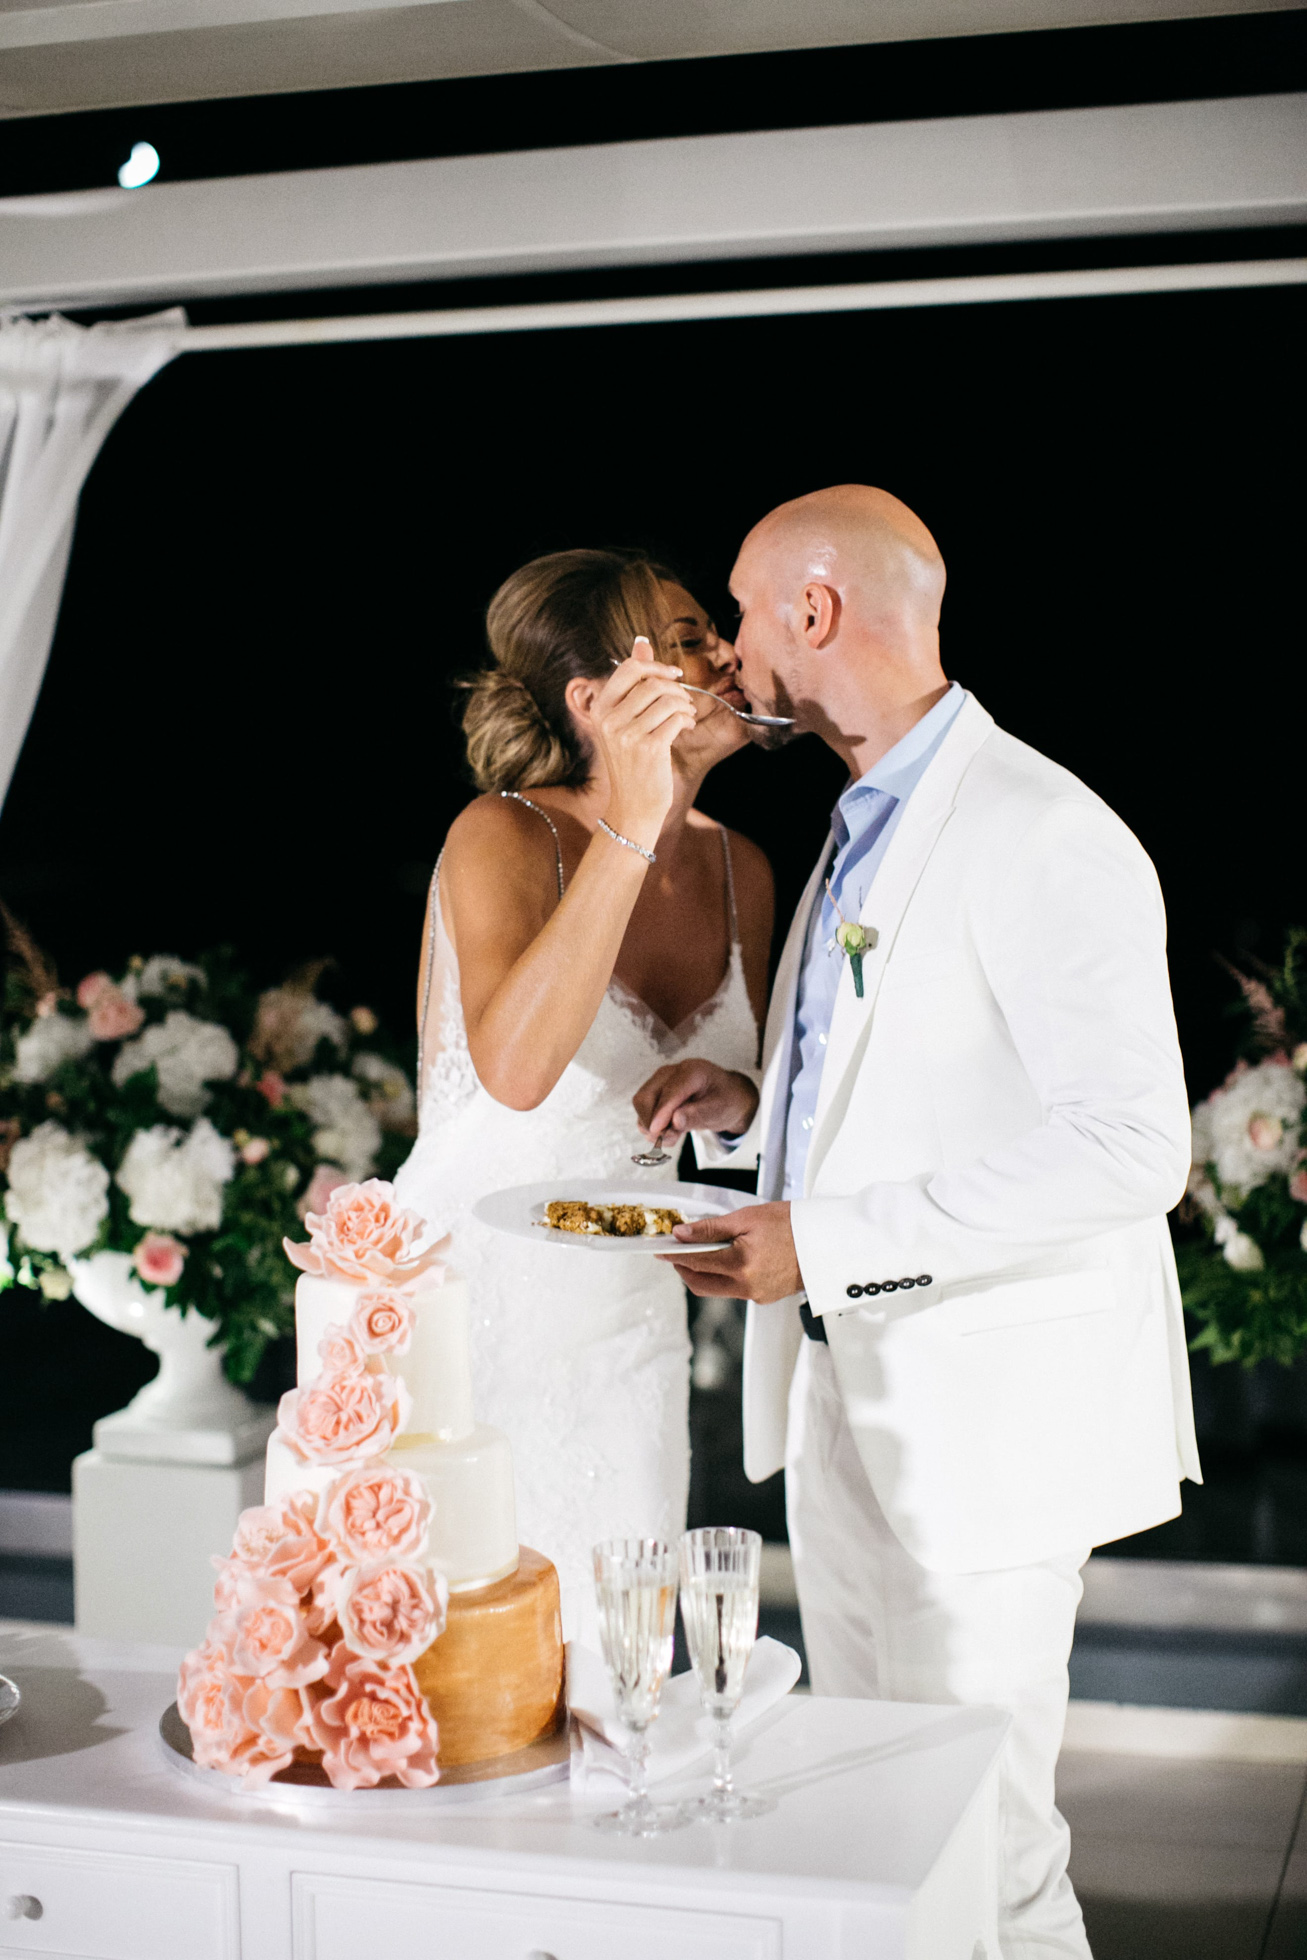 Cake cut and bride and groom sweet kiss at Le Ciel wedding estate in Santorini island, Greece.